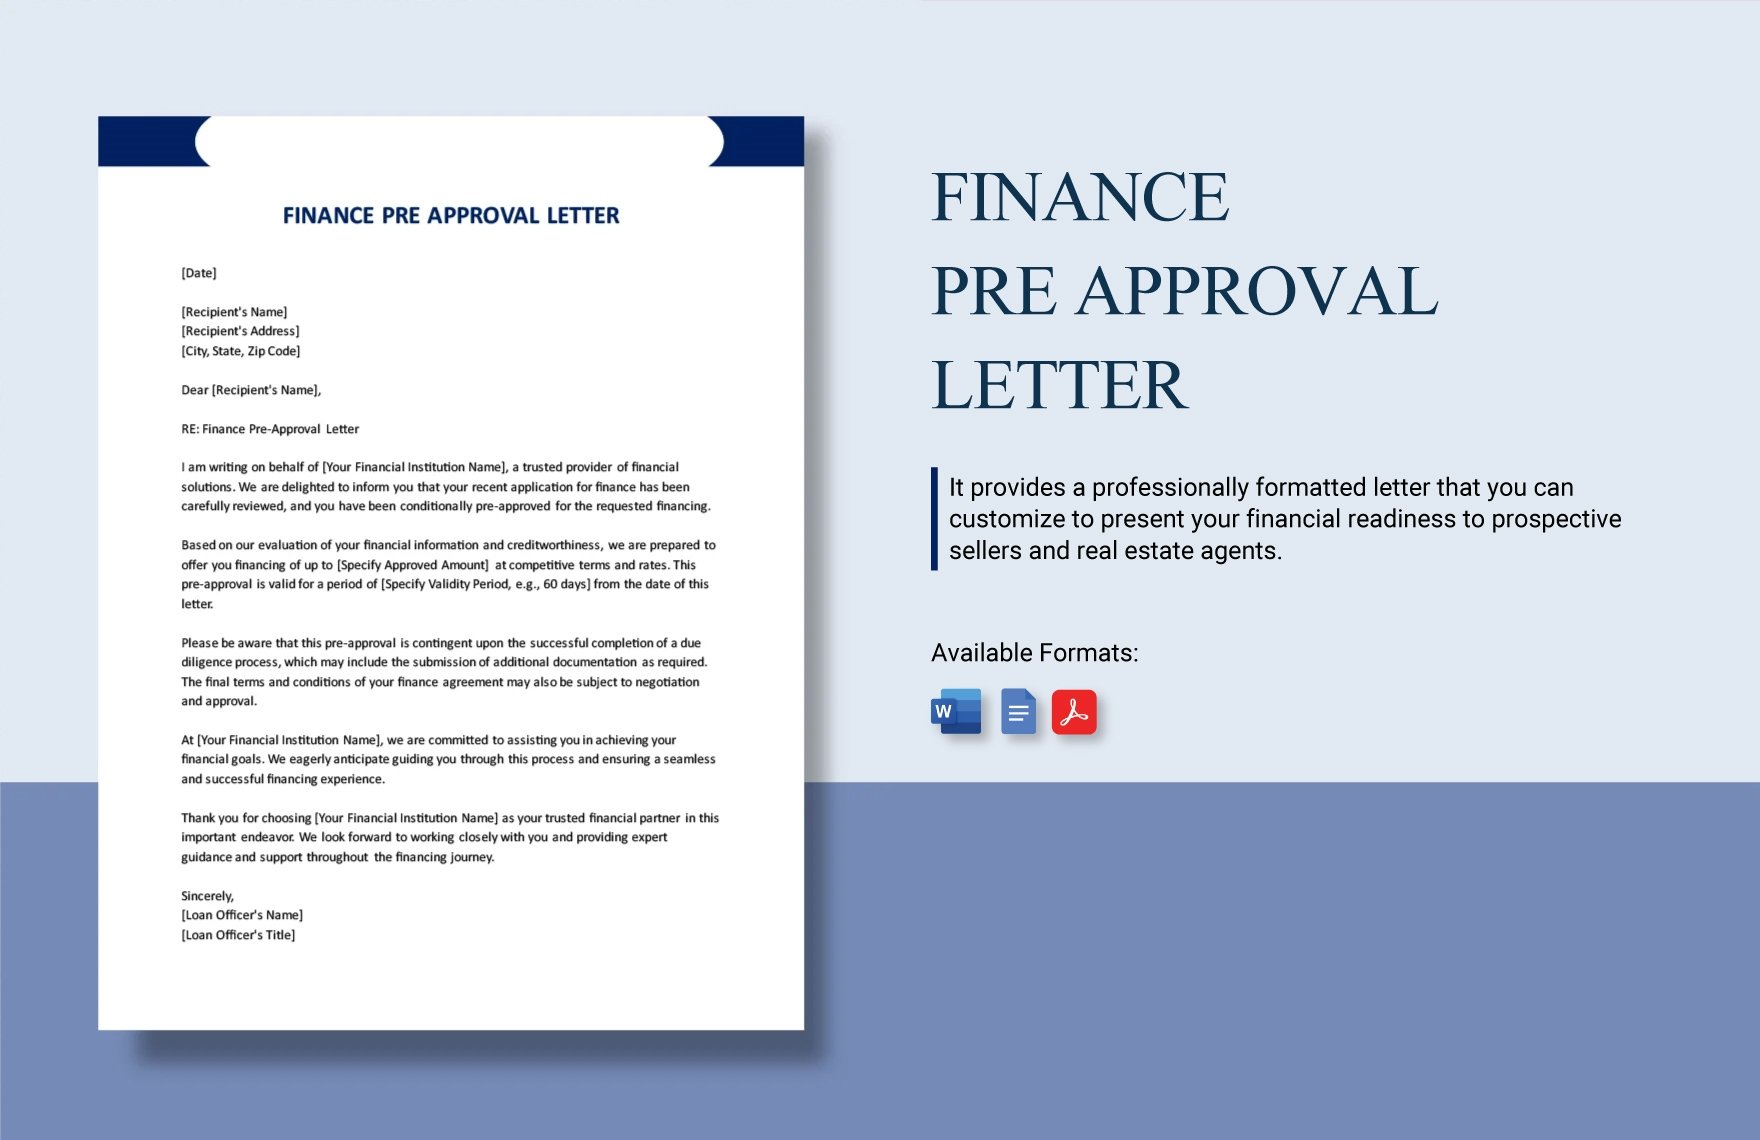 Finance Pre Approval Letter in Word, Google Docs, PDF